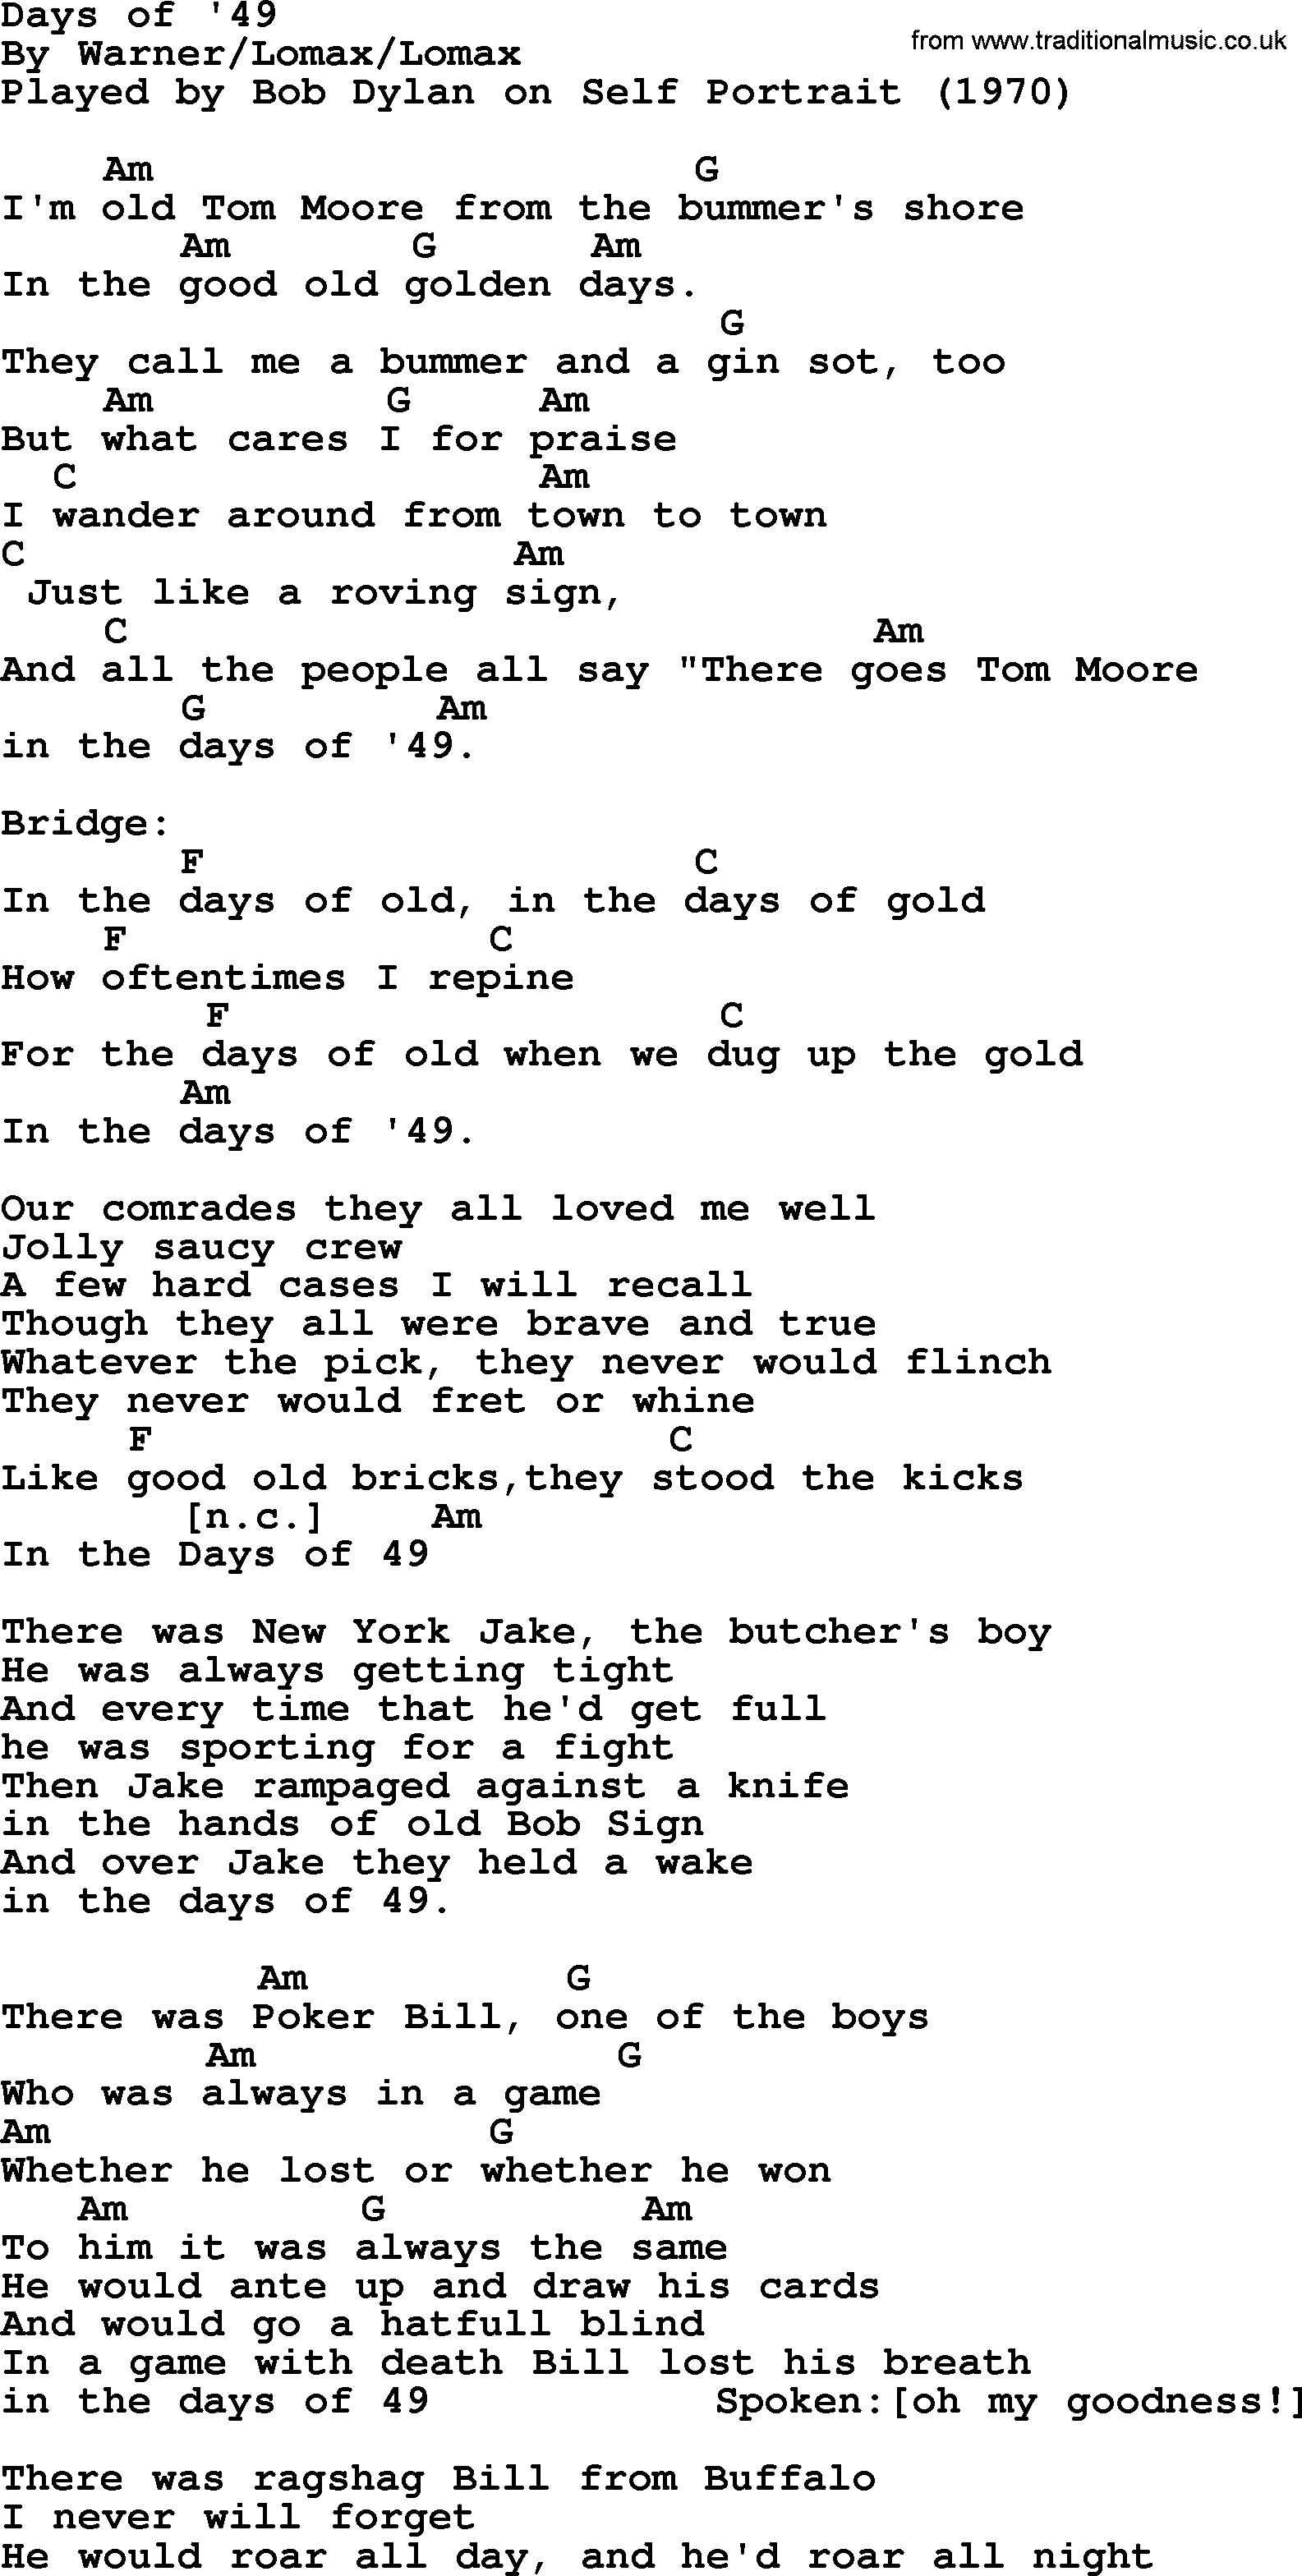 Bob Dylan song, lyrics with chords - Days of '49